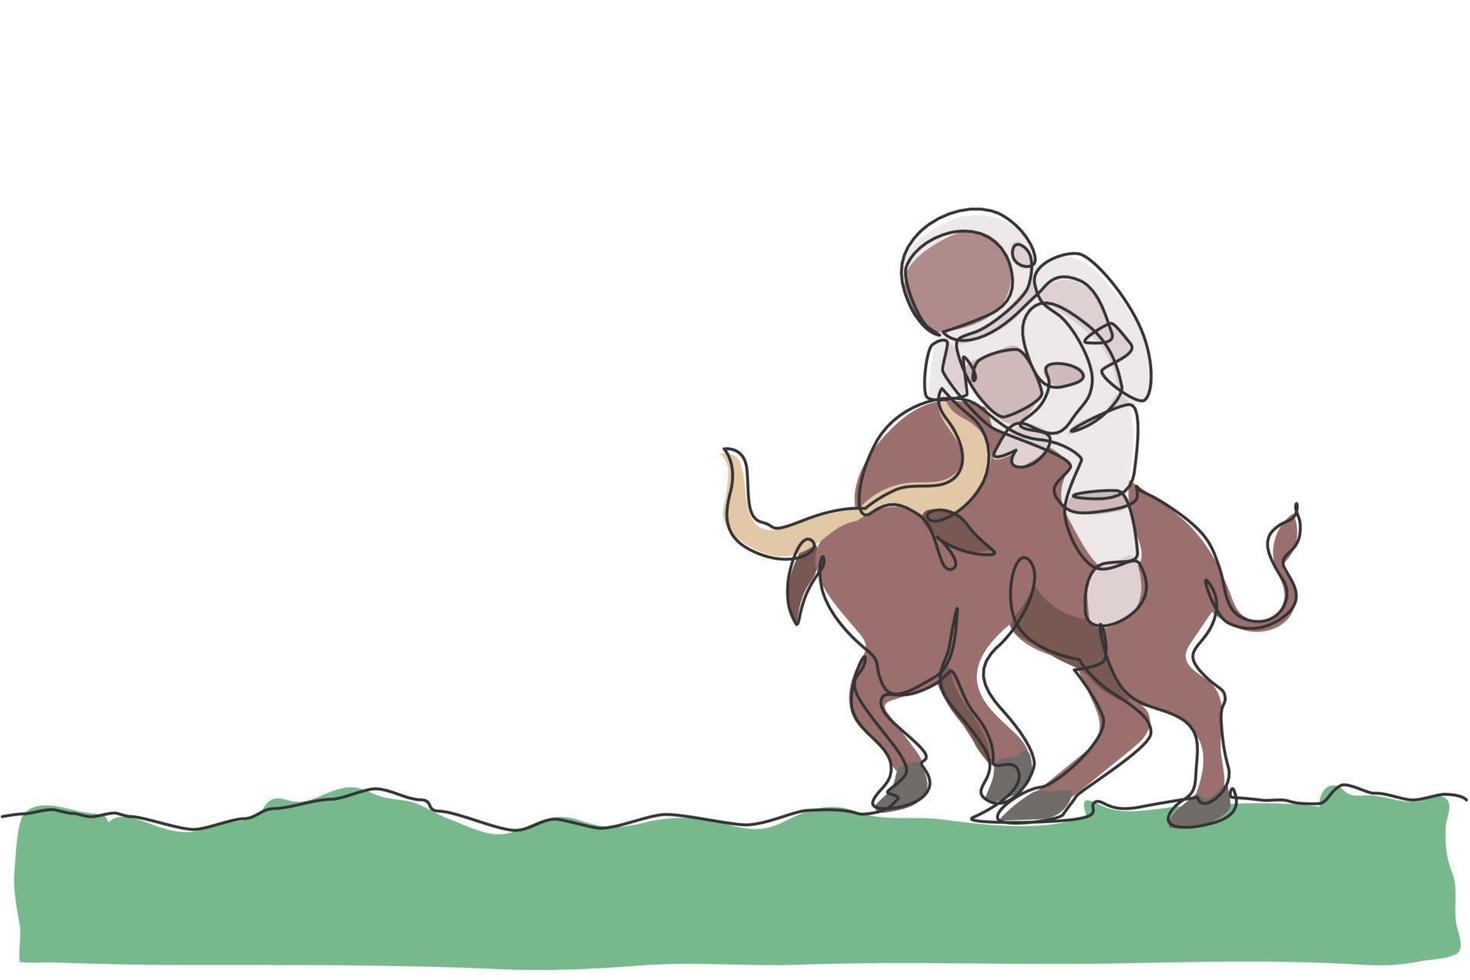 en kontinuerlig linjeteckning av rymdmannen tar en promenad på en arg tjur, vilda djur i månytan. djup rymd safari resa koncept. dynamisk enkel linje rita grafisk design vektor illustration